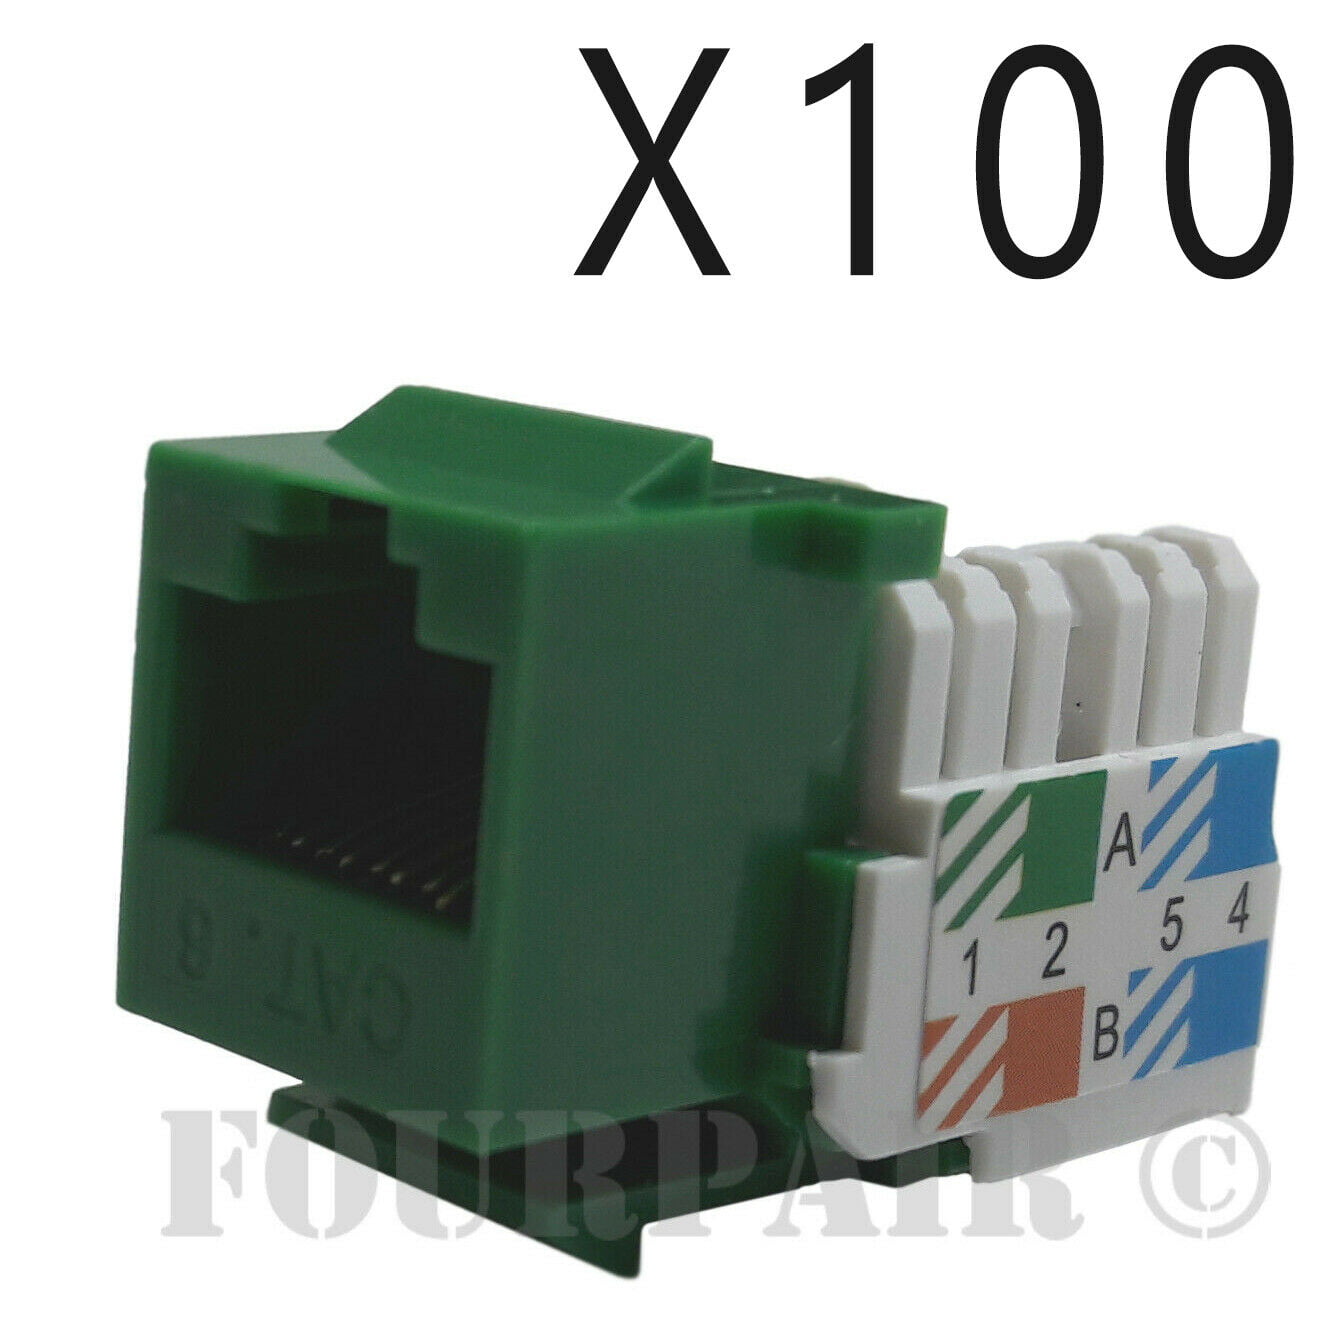 10 pack lot Keystone Jack Cat6 Green Network Ethernet 110 Punchdown 8P8C 